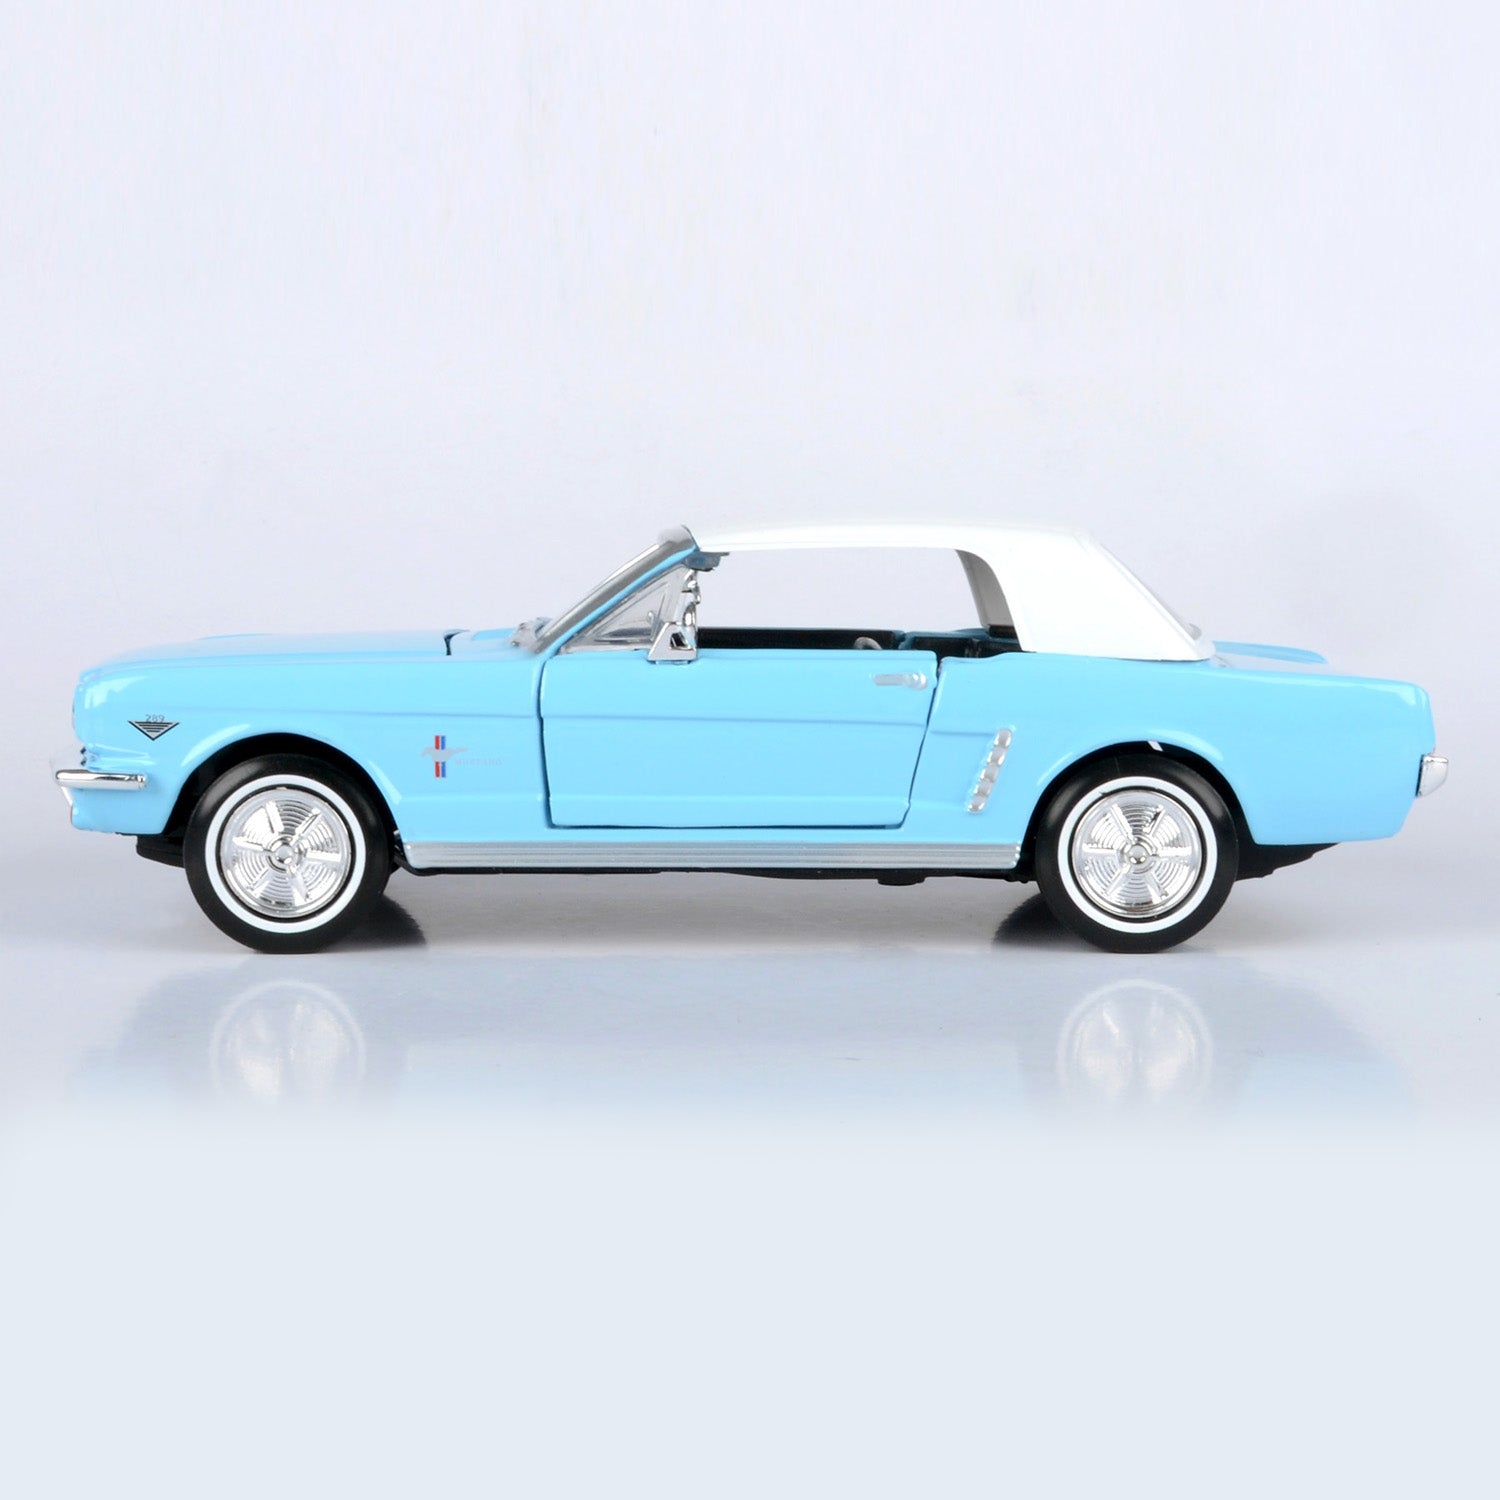 Mustang Model | Motormax Car 007Store Ford James Bond By Thunderball